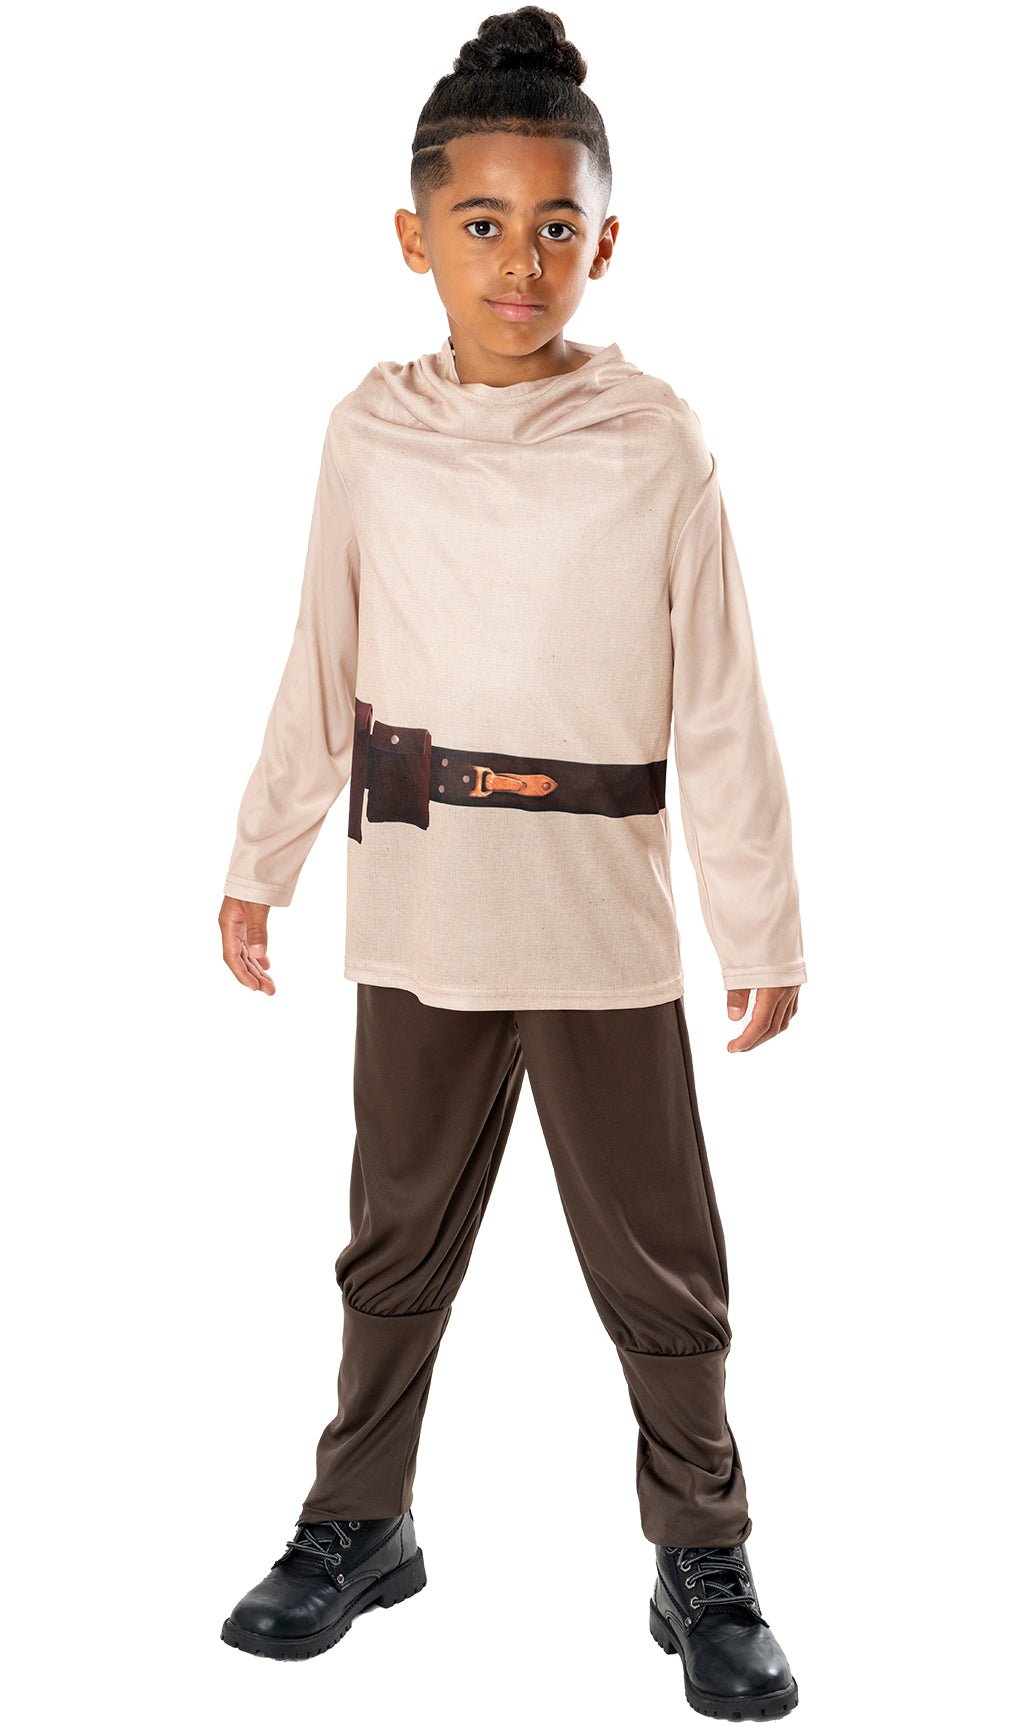 Disfraz de Obi-Wan Kenobi™ Star Wars infantil I Don Disfraz